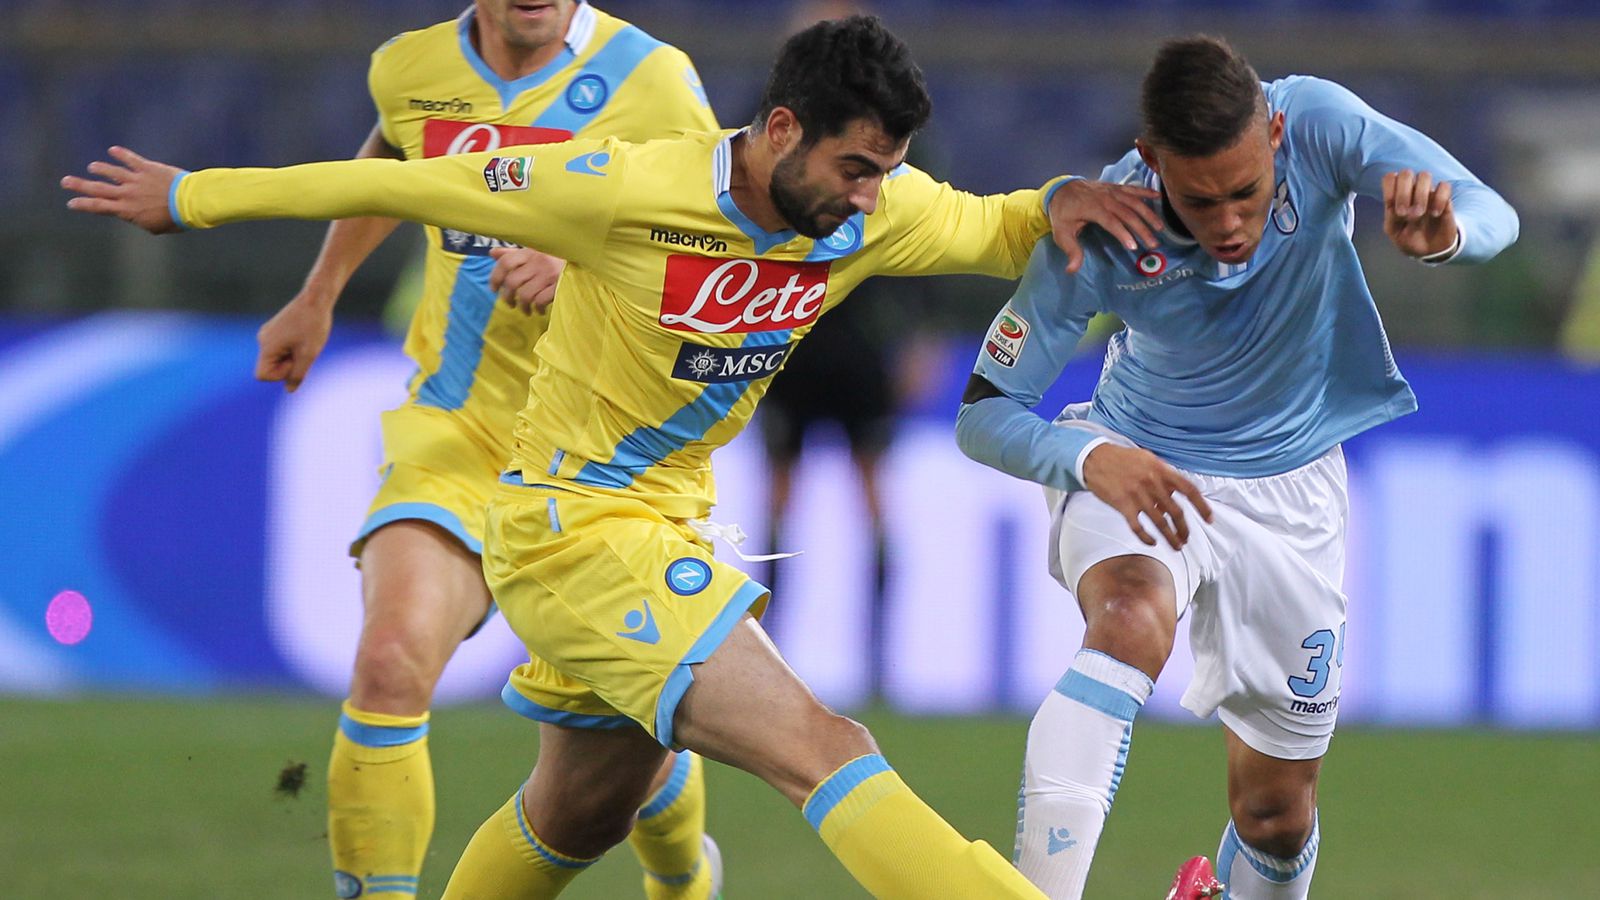 Napoli v. Lazio: Lineups and Match Thread - The Siren's Song